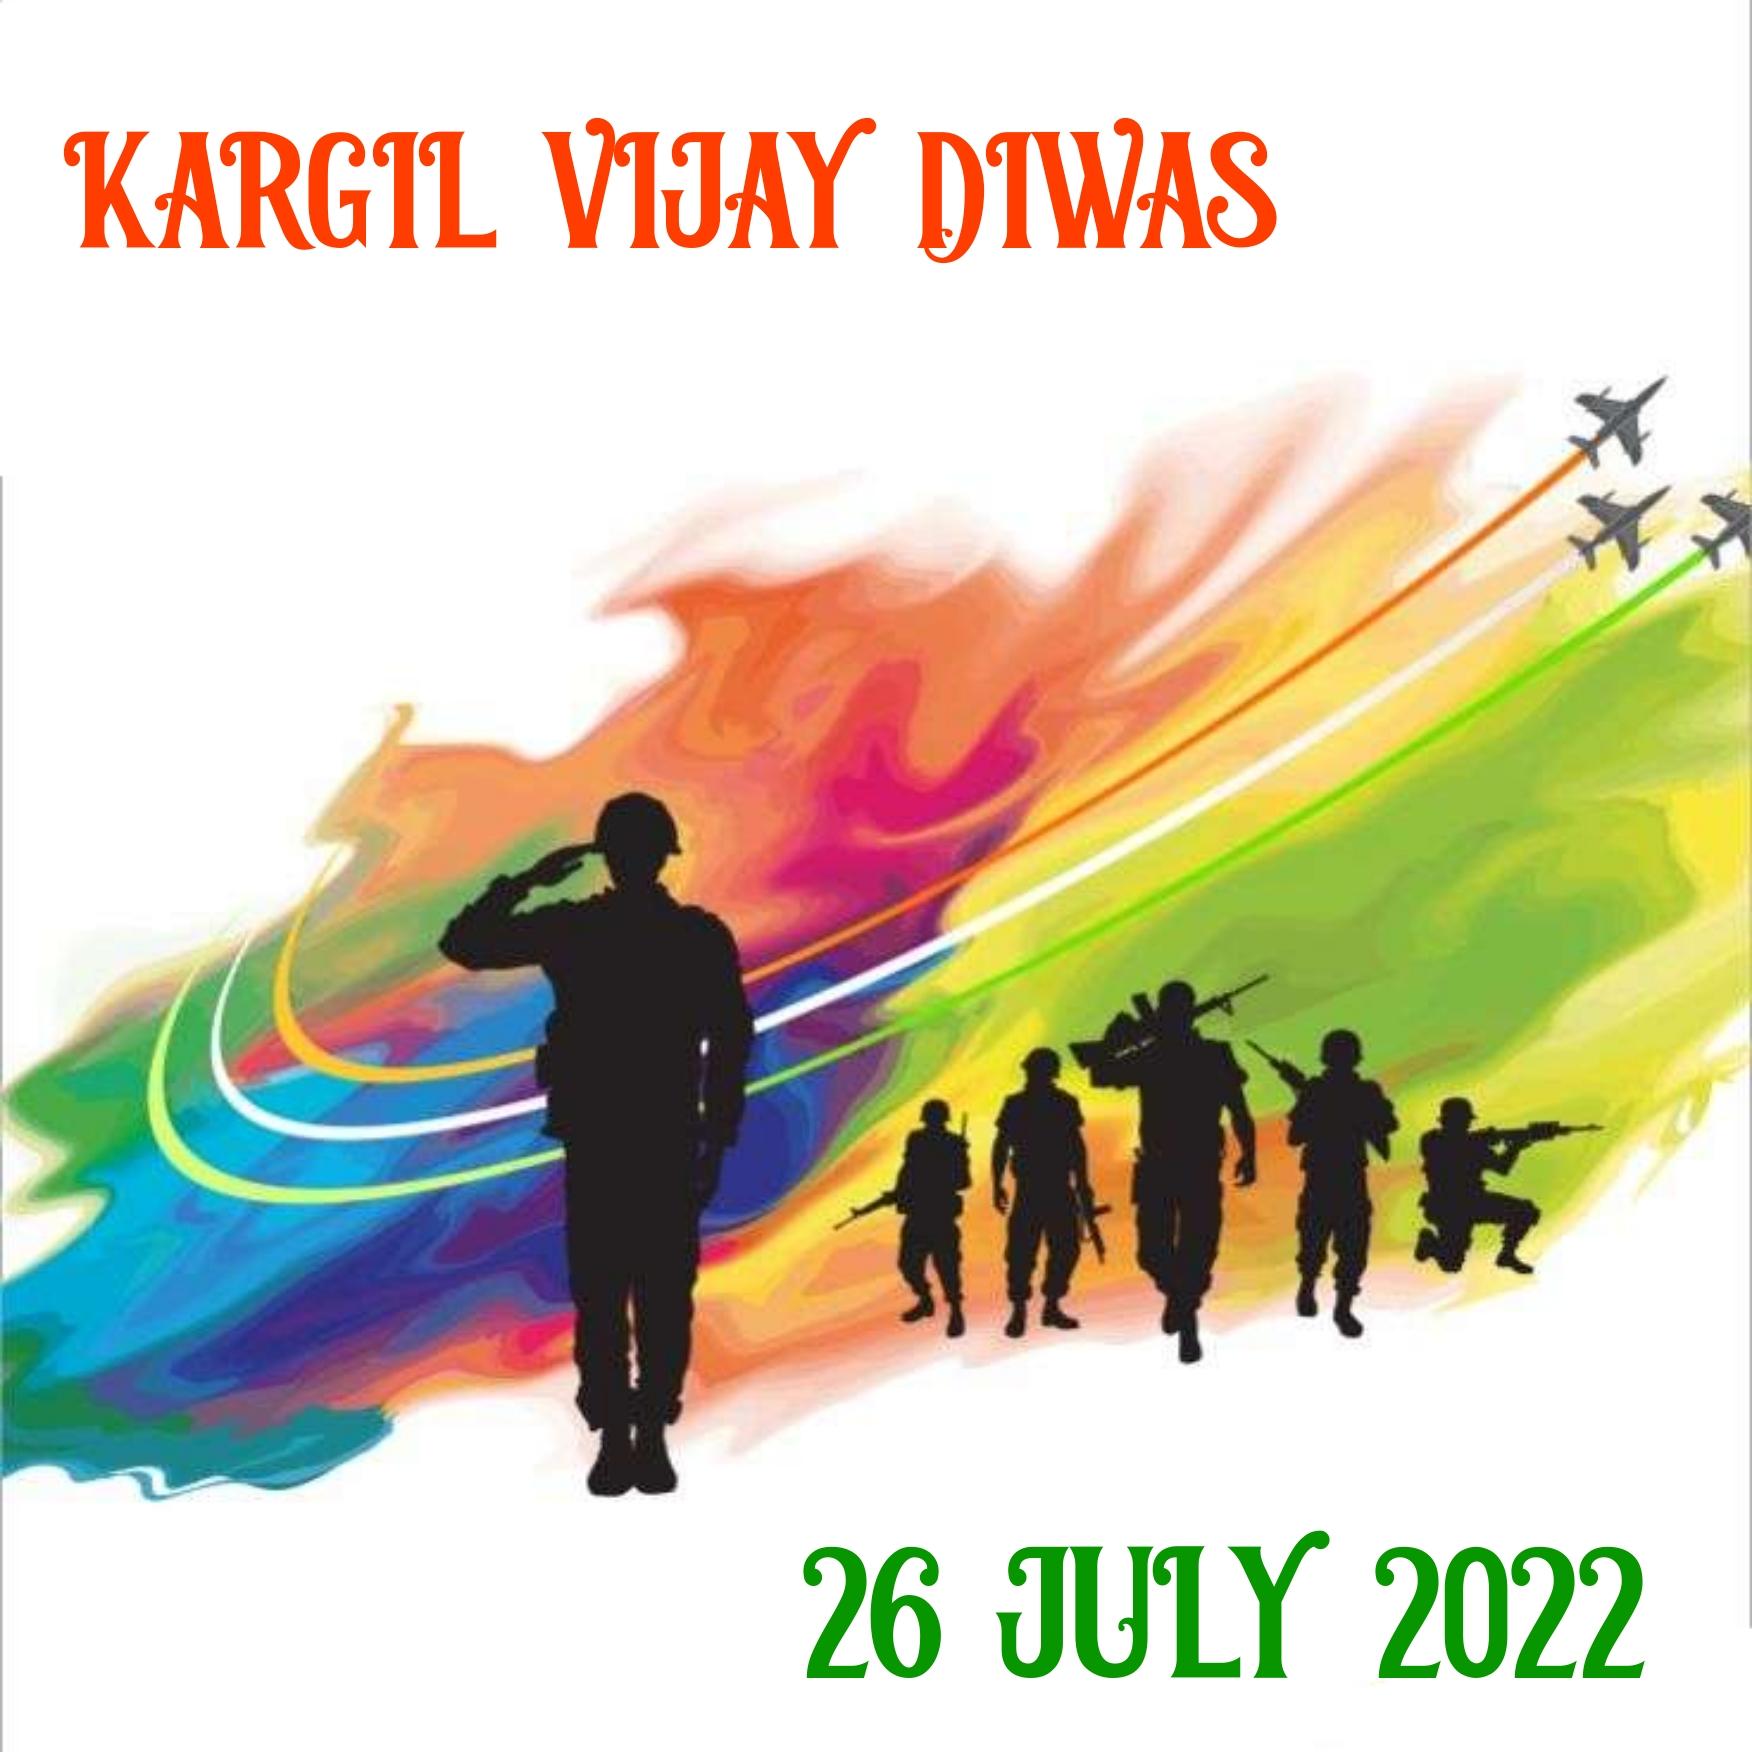 New Kargil Vijay Diwas 2022 Images Hd Download